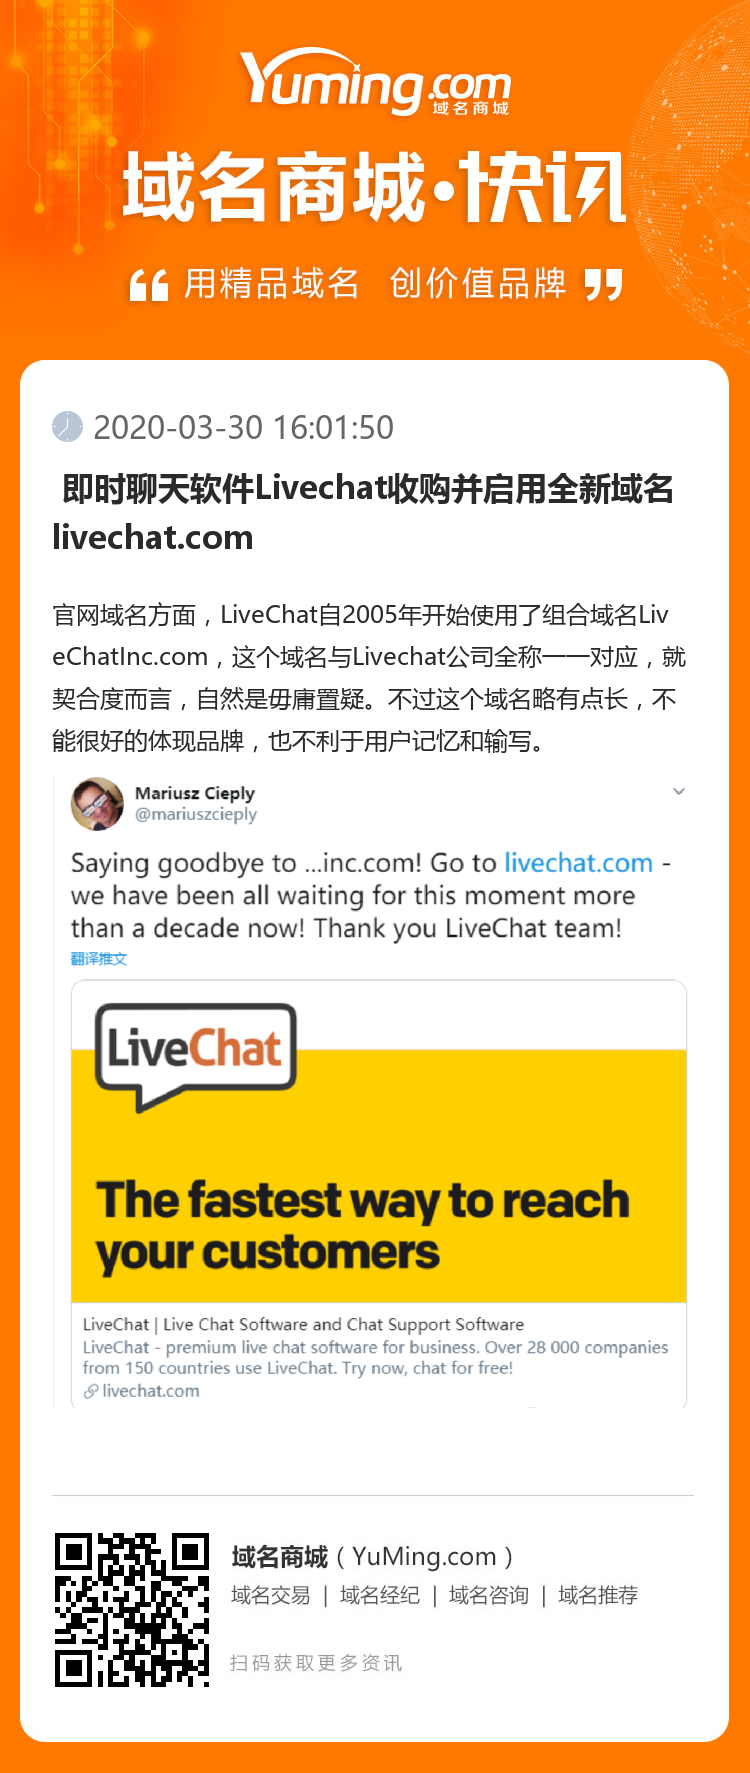  即时聊天软件Livechat收购并启用全新域名 livechat.com